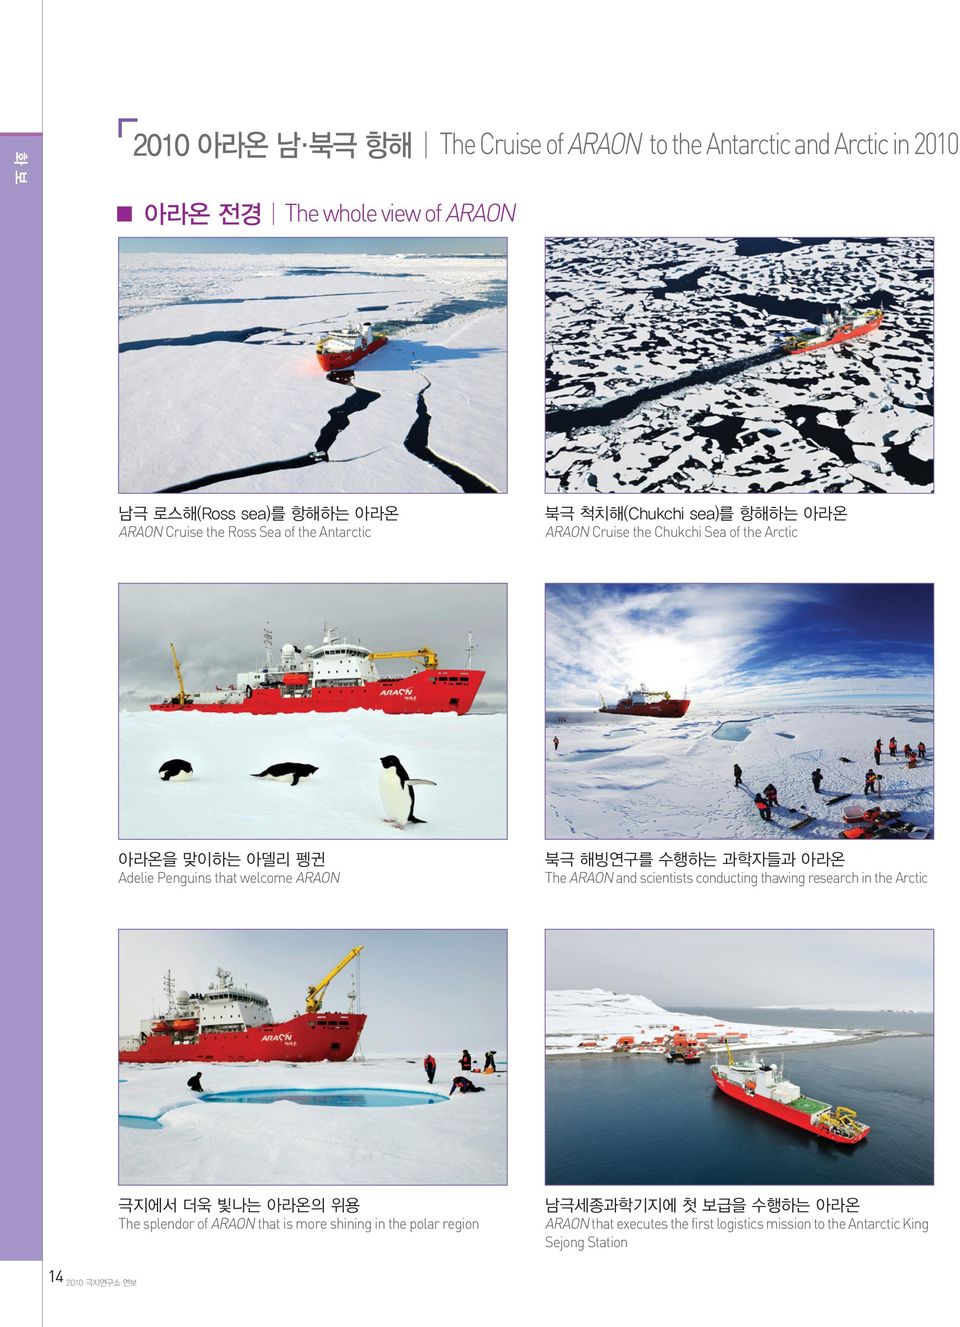 ARAON 북극 해빙연구를 수행하는 과학자들과 아라온 The ARAON and scientists conducting thawing research in the Arctic 극지에서 더욱 빛나는 아라온의 위용 The splendor of ARAON that is